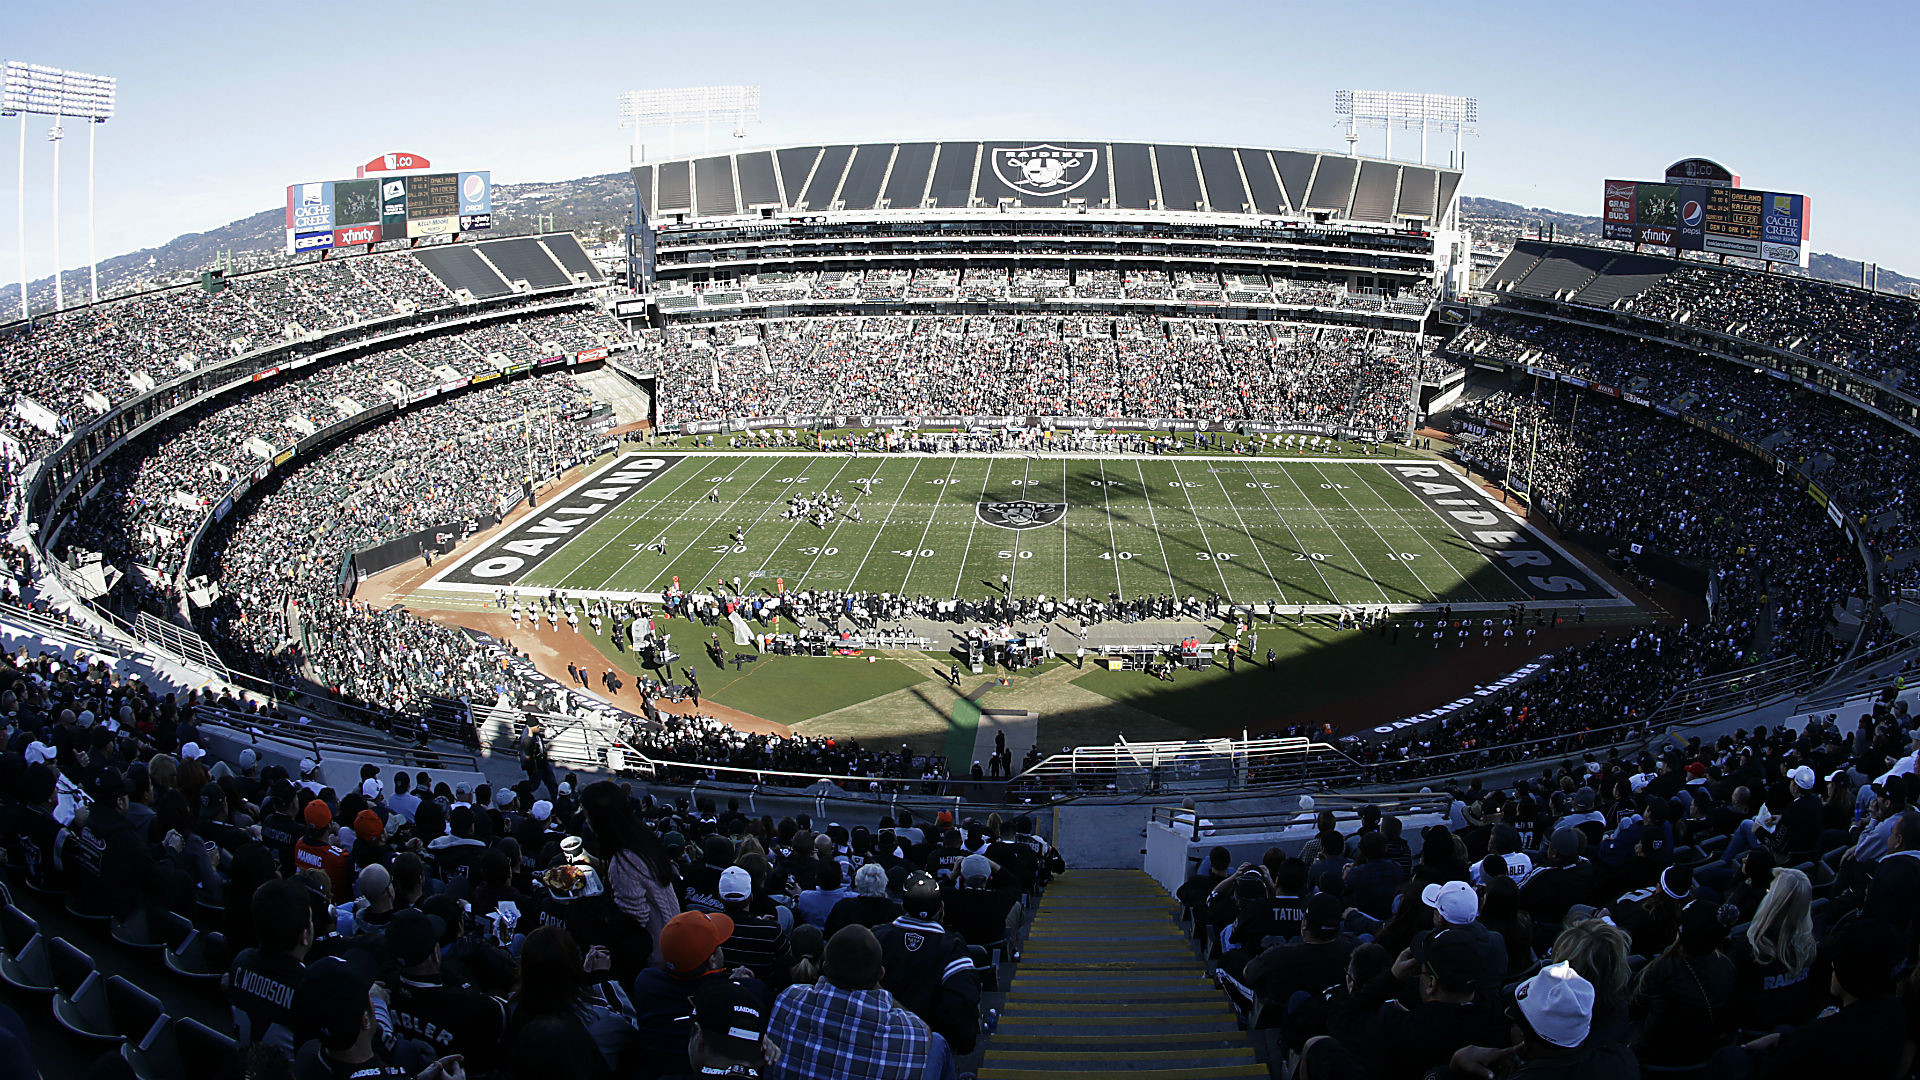 1920x1080 Report: Raiders ready to demolish Coliseum, kick A's to the curb Â· NFL